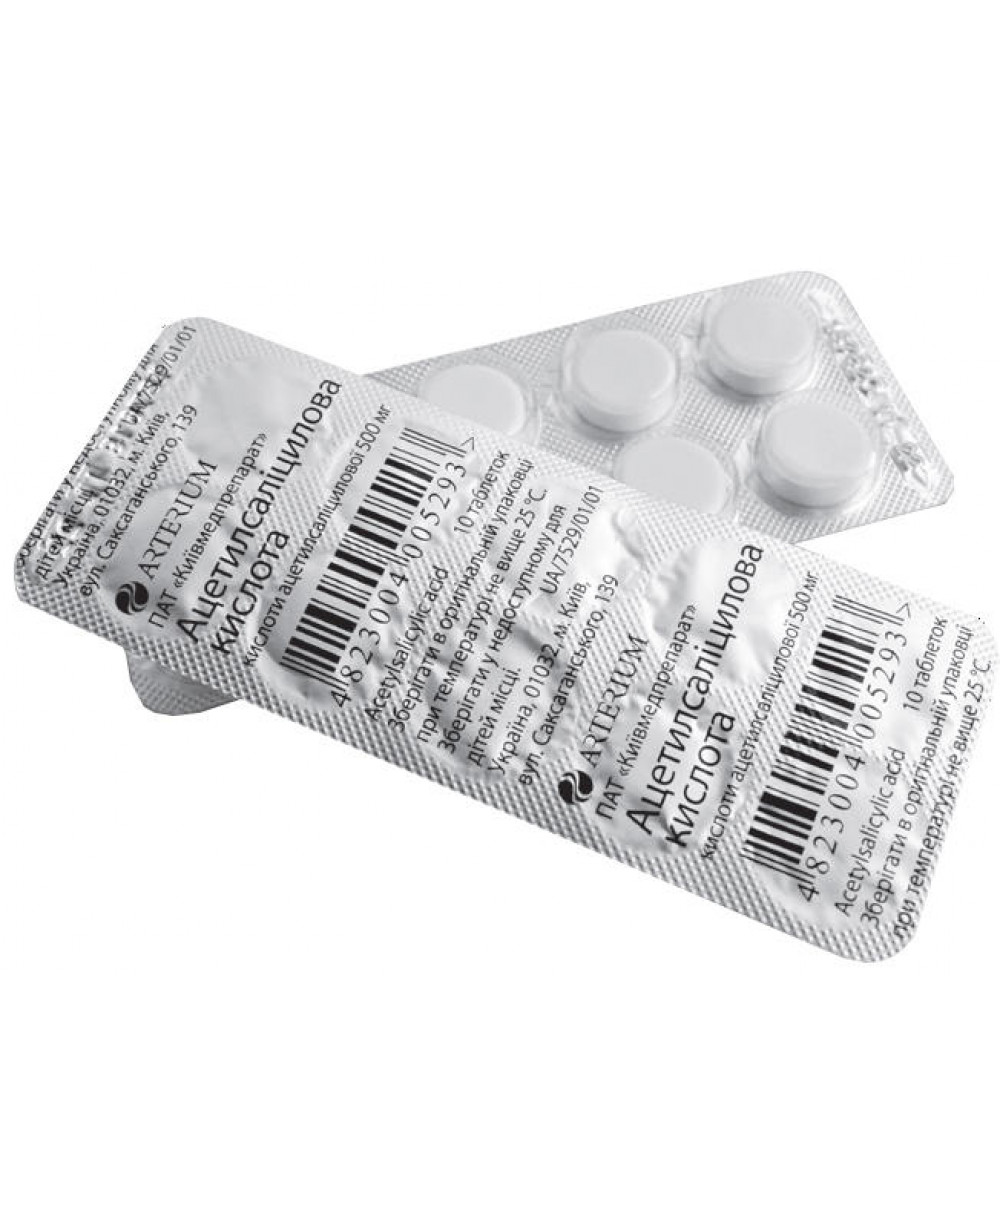 2744 ВОКАСЕПТ - Paracetamol, combinations excl. psycholeptics